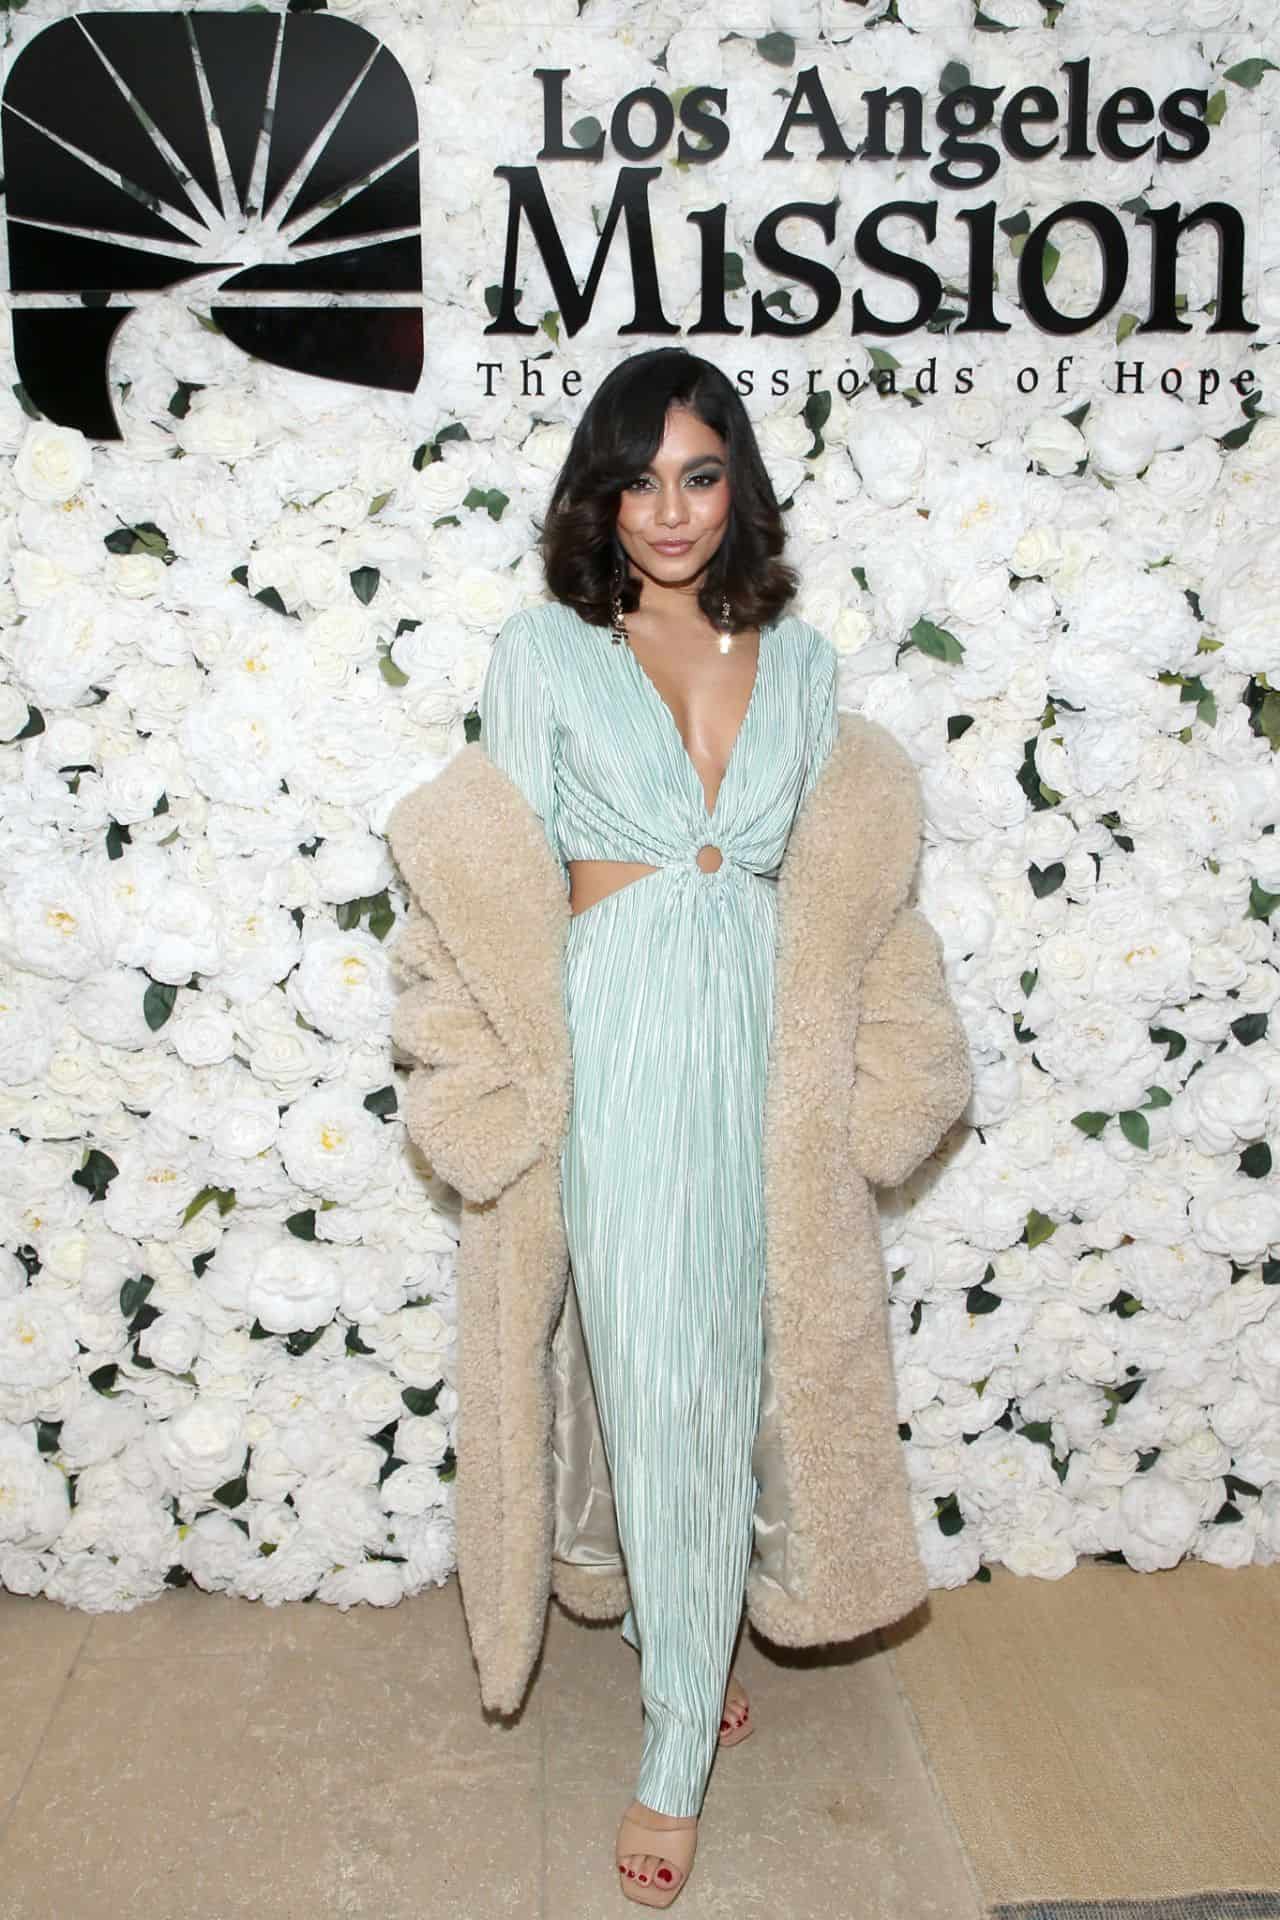 Vanessa Hudgens Wore a Mint-Colored Dress at LA Mission’s Fundraiser Gala